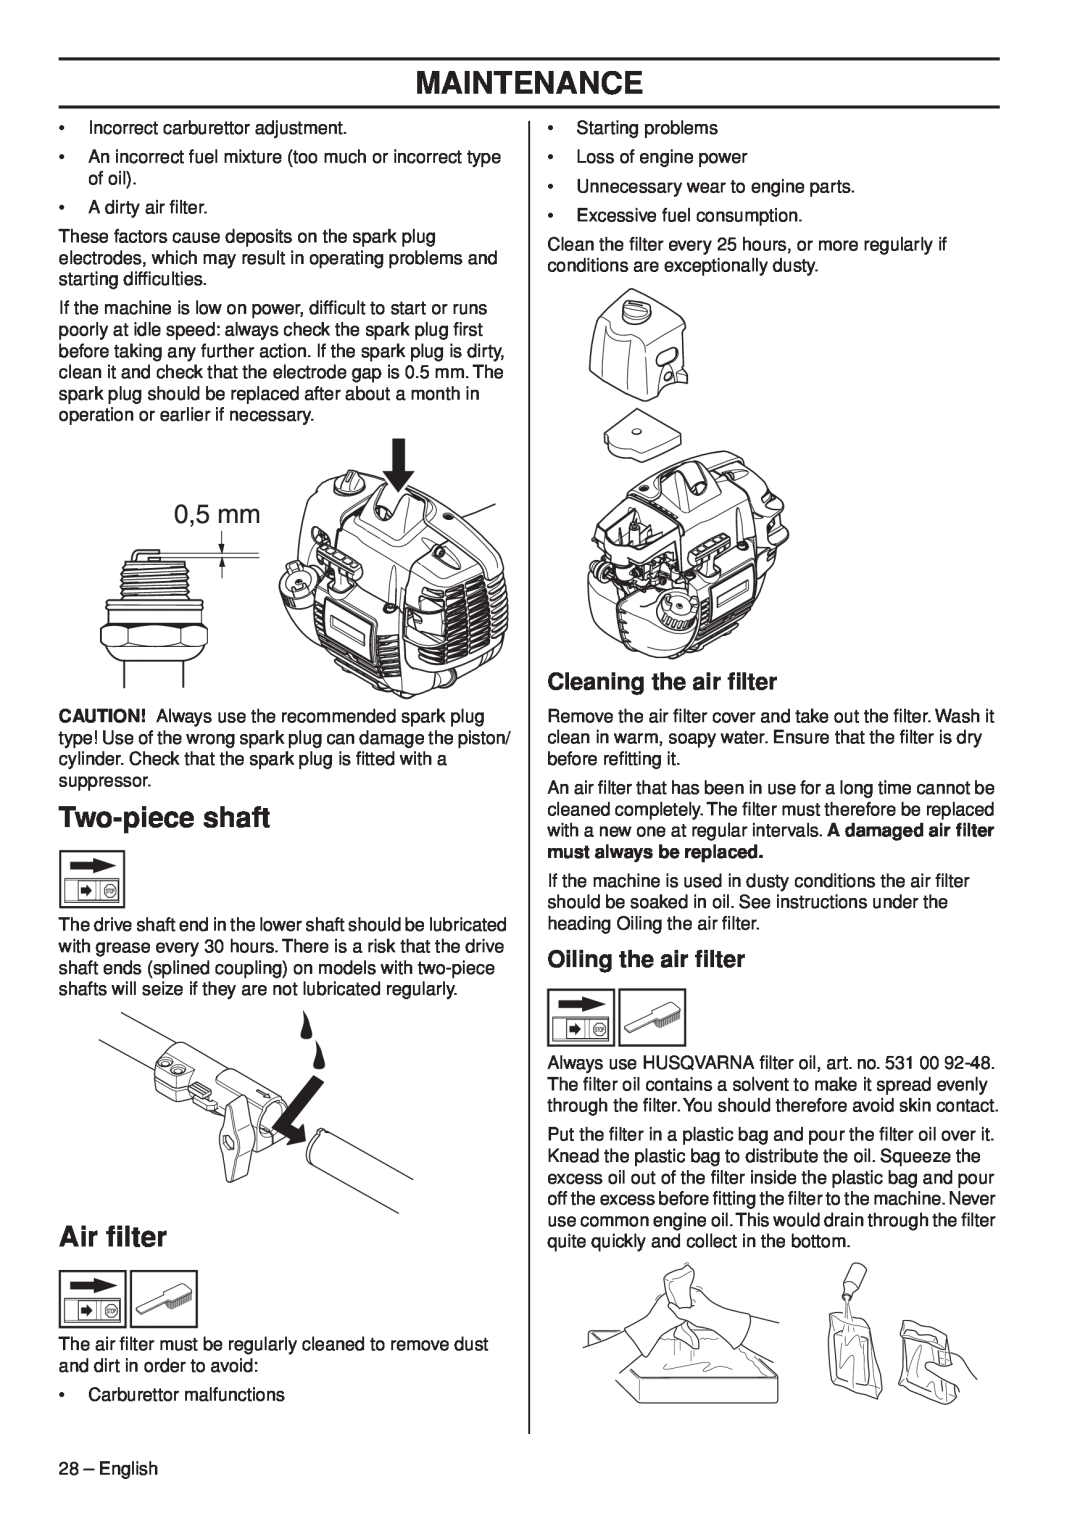 Husqvarna 966976701 manual Two-piece shaft, Air ﬁlter, Cleaning the air ﬁlter, Oiling the air ﬁlter, Maintenance 